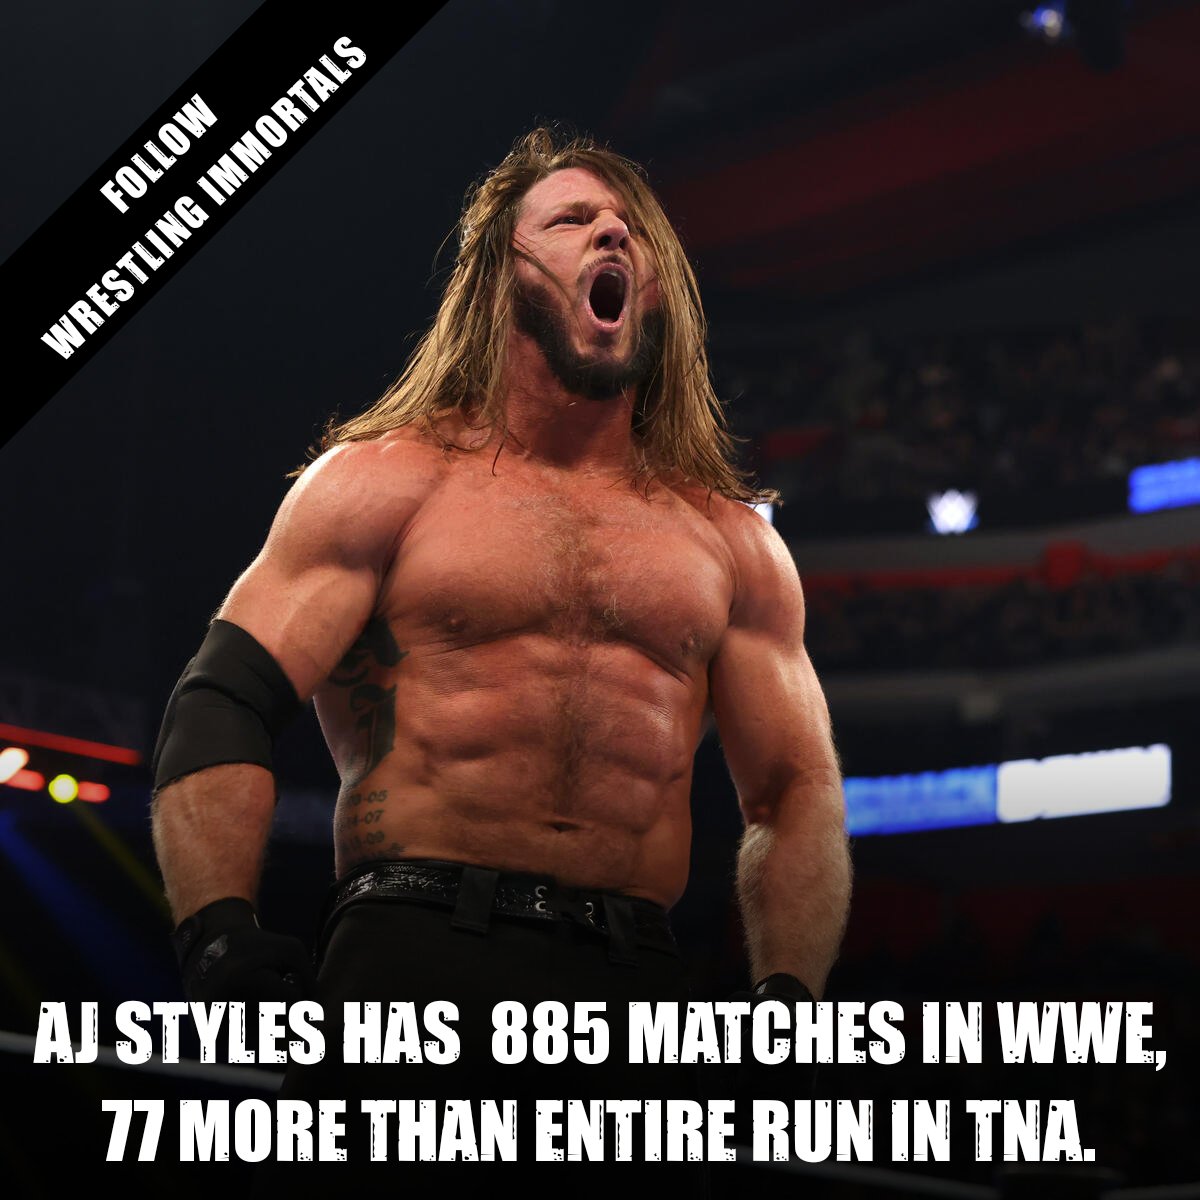 #AJStyles has 885 matches in WWE. 77 more than Entire run in #TNA.

Image Credit @WWE
#phenomenalone
#DrewMcIntyre #cody #TnaWrestling #CodyRhodes #AEWCollision #WWE #WWEDraft #SmackDown #damianpriest #WWEBacklash #WWESpeed #swerve #WWERaw #finnbalor #judgmentday #randyorton